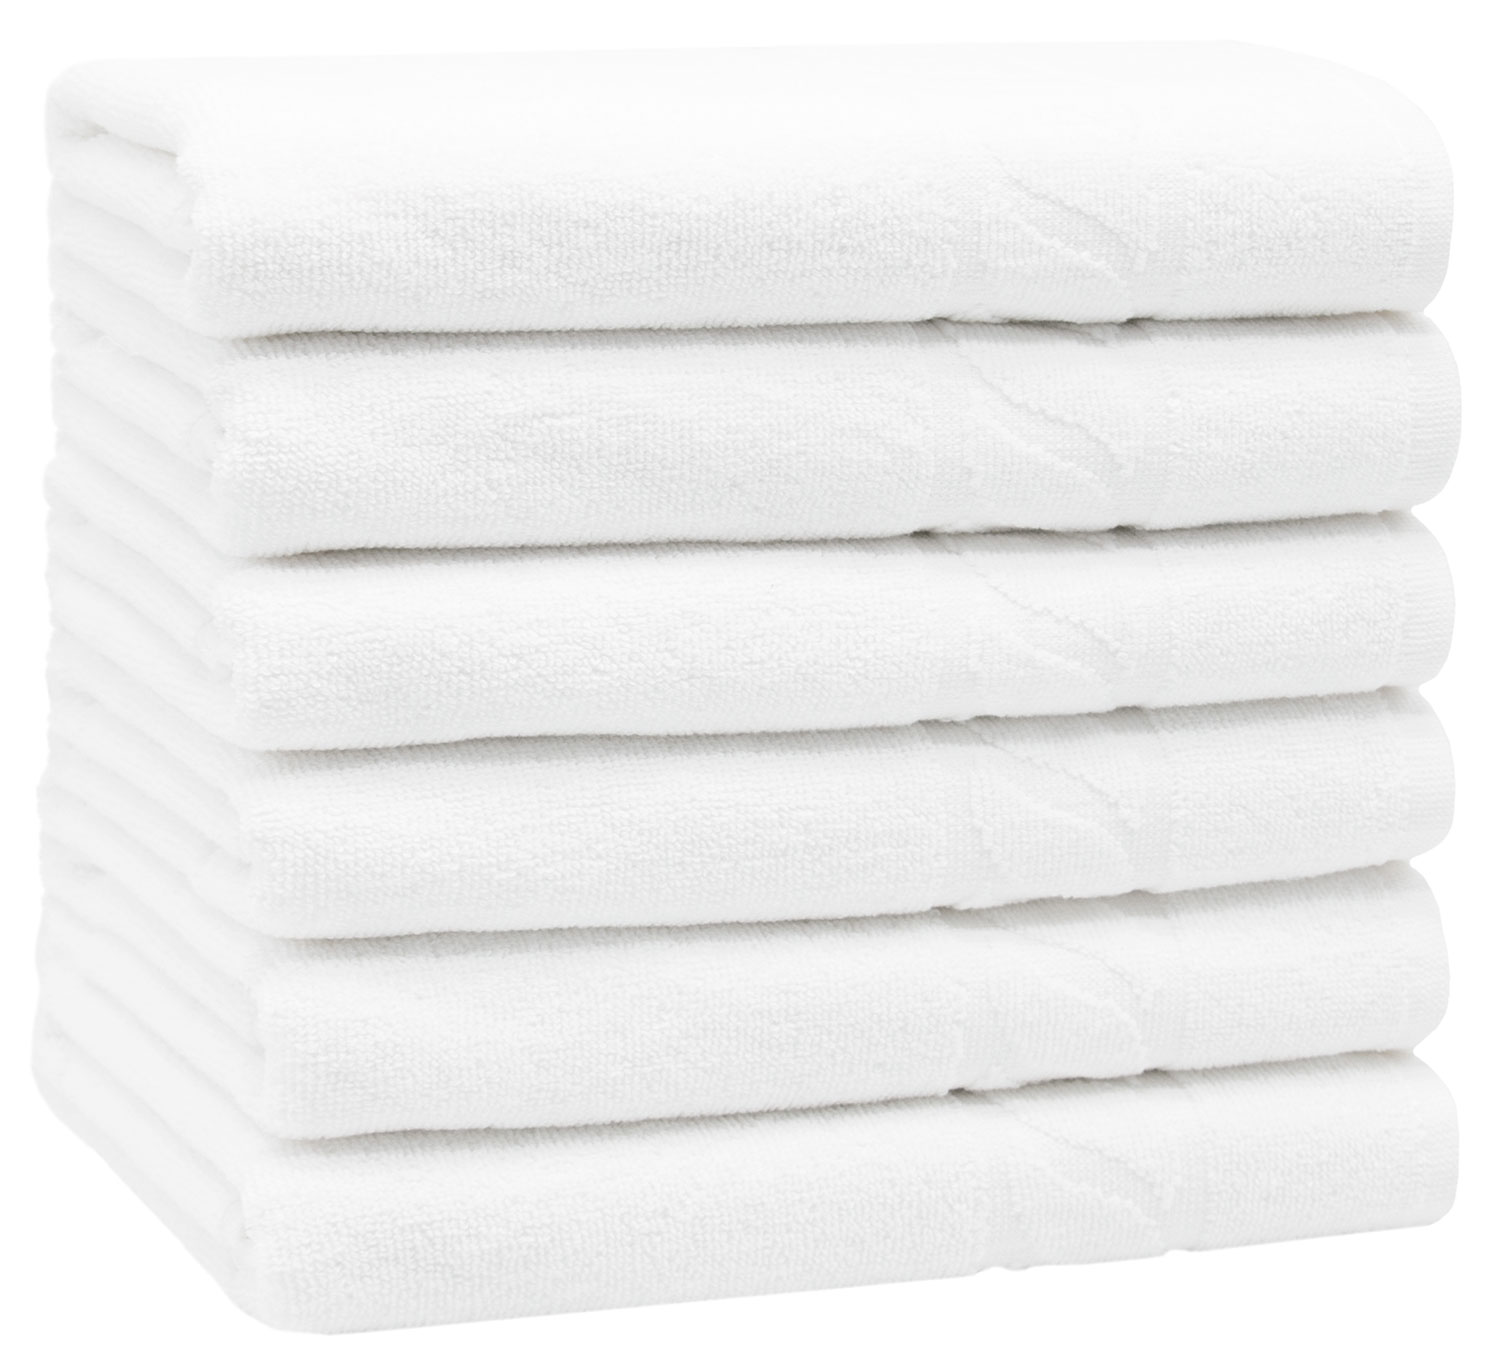 Handtücher 6er-Set, 100% Baumwolle, weiß